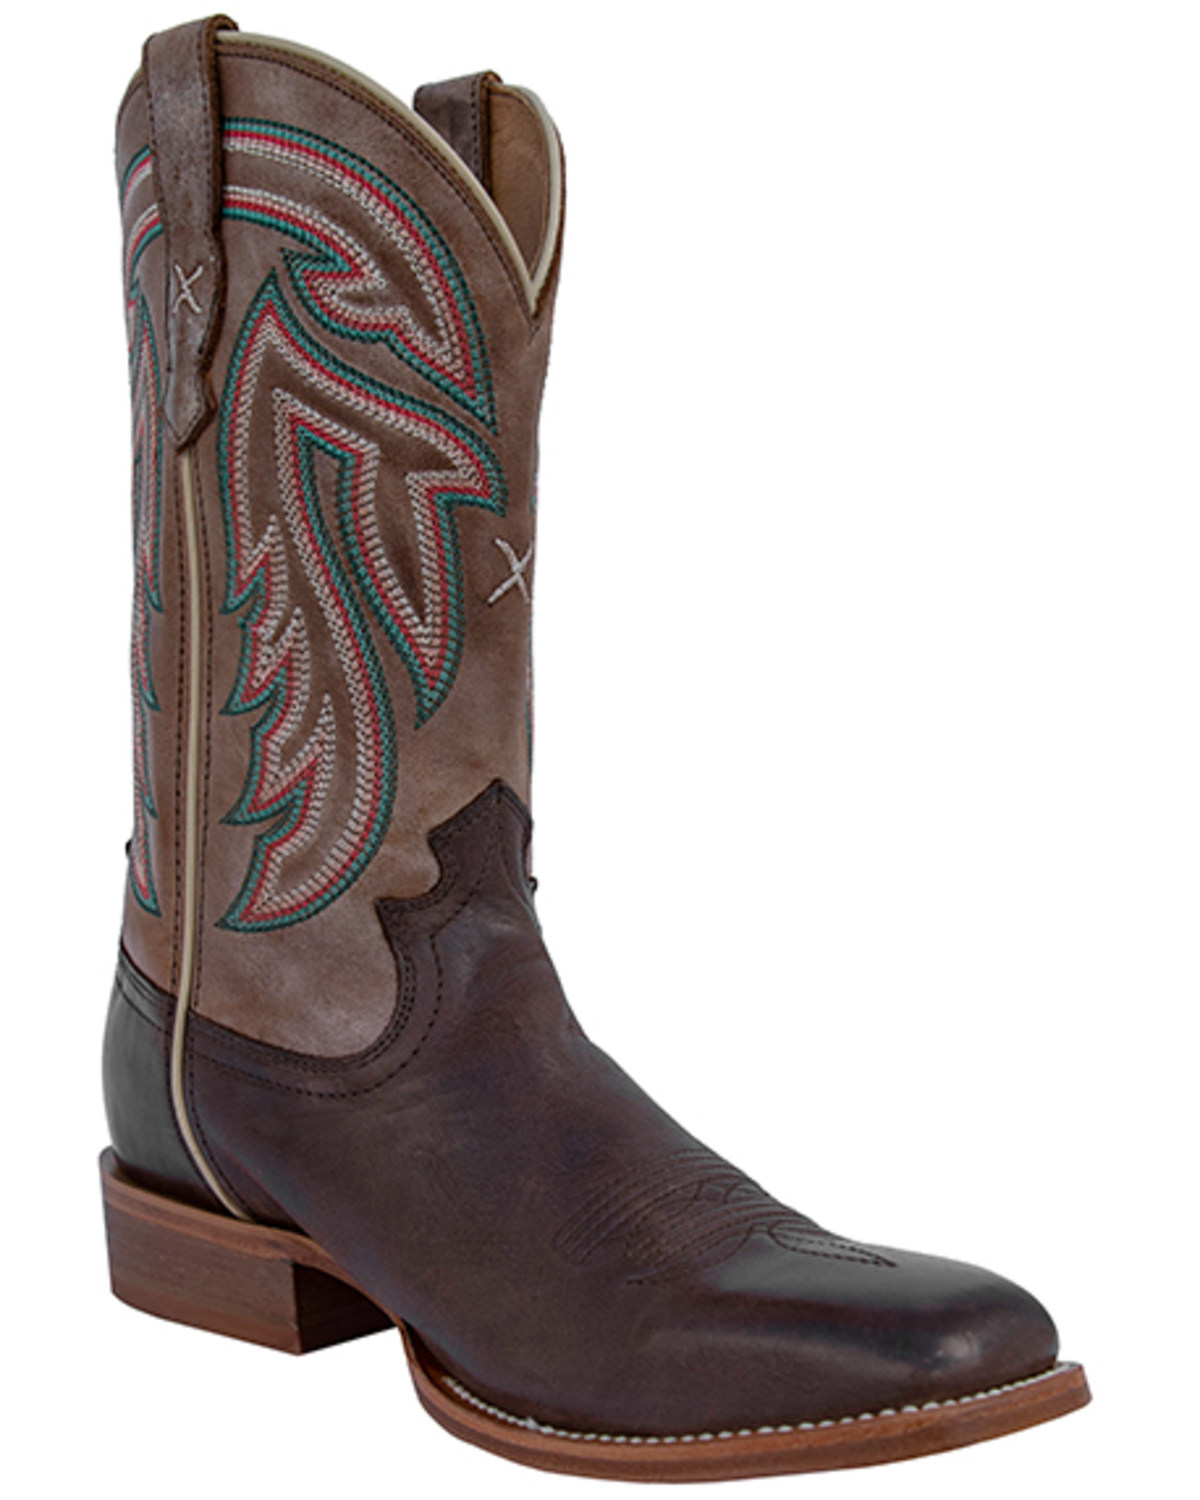 Twisted X Women's Rancher Espresso Western Boots - Square Toe